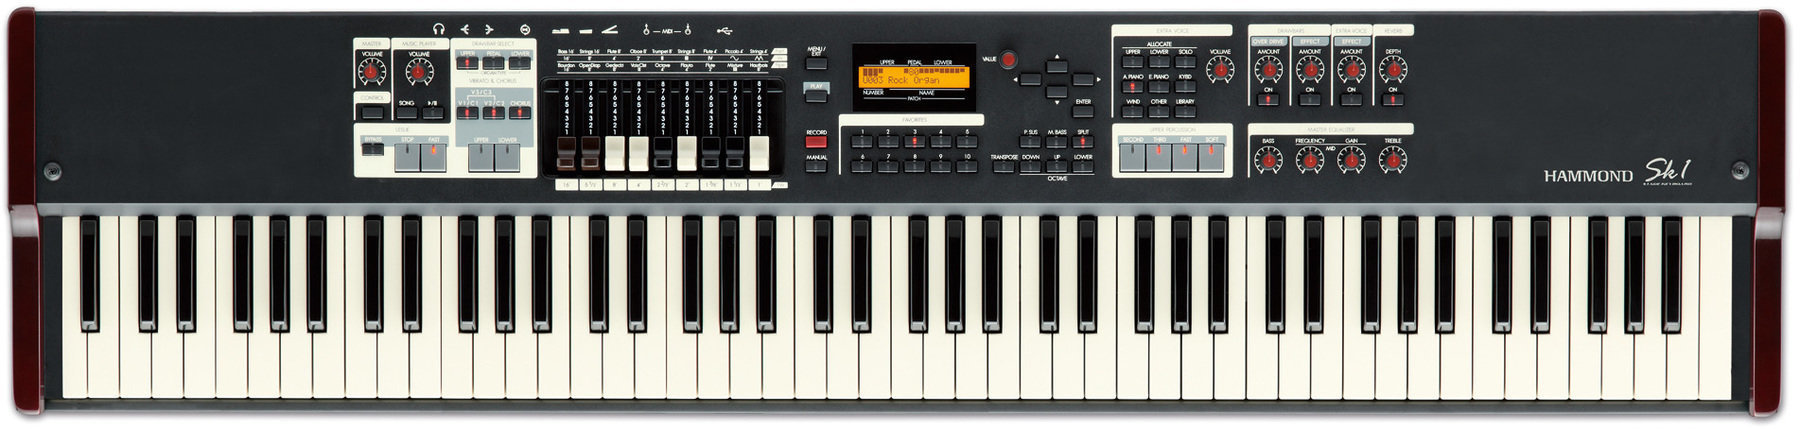 Electronic Organ Hammond SK1-88